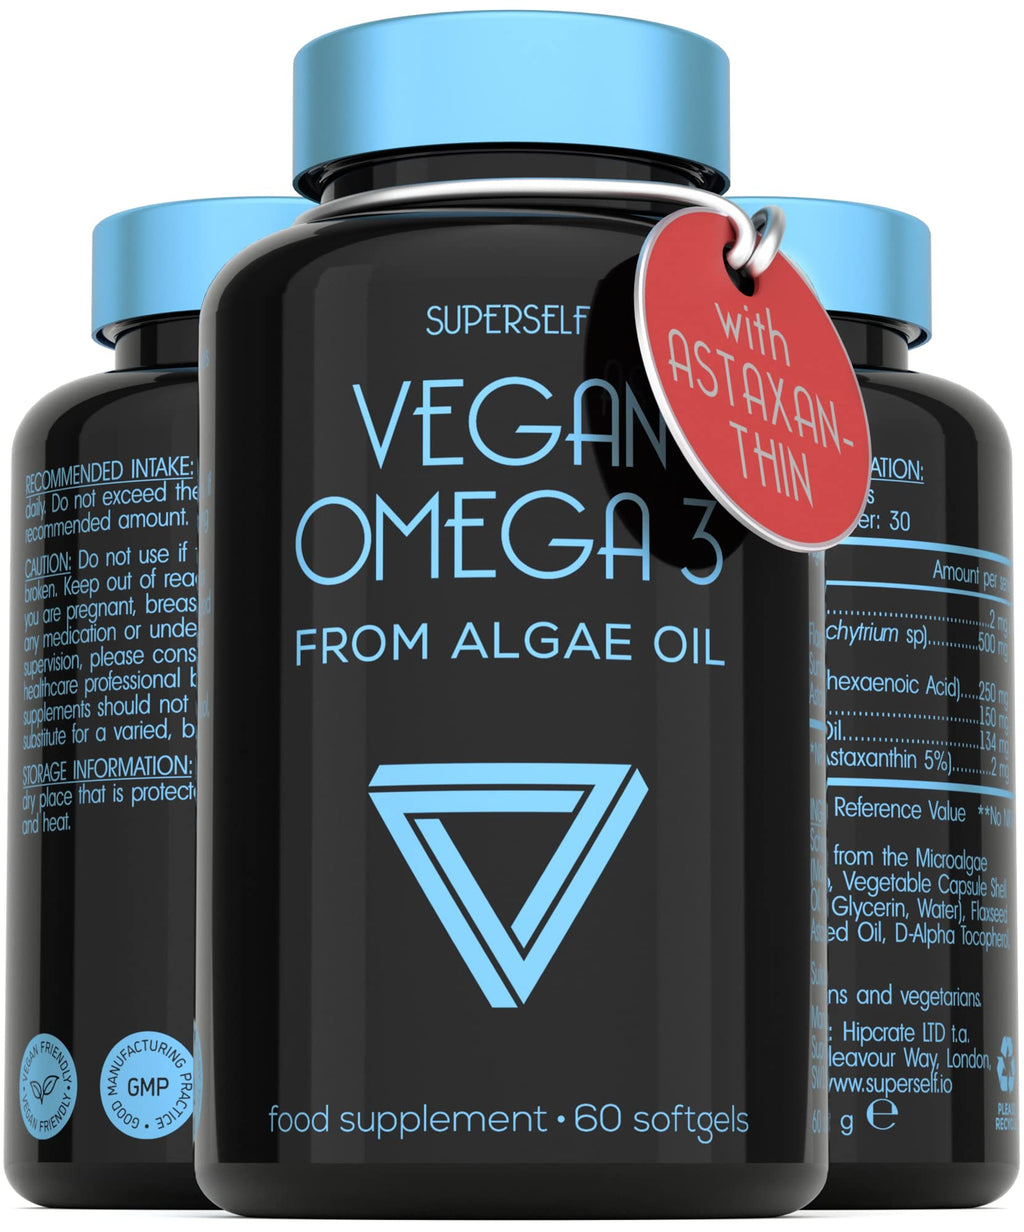 Vegan Omega 3 Capsules - High Strength DHA from Algae Oil 500mg - Algae Omega 3 Vegan with Flaxseed Oil, Astaxanthin, Vitamin E - 60 Easy to Swallow Softgel Tablets - Sustainable Vegetarian Supplement - BeesActive Australia